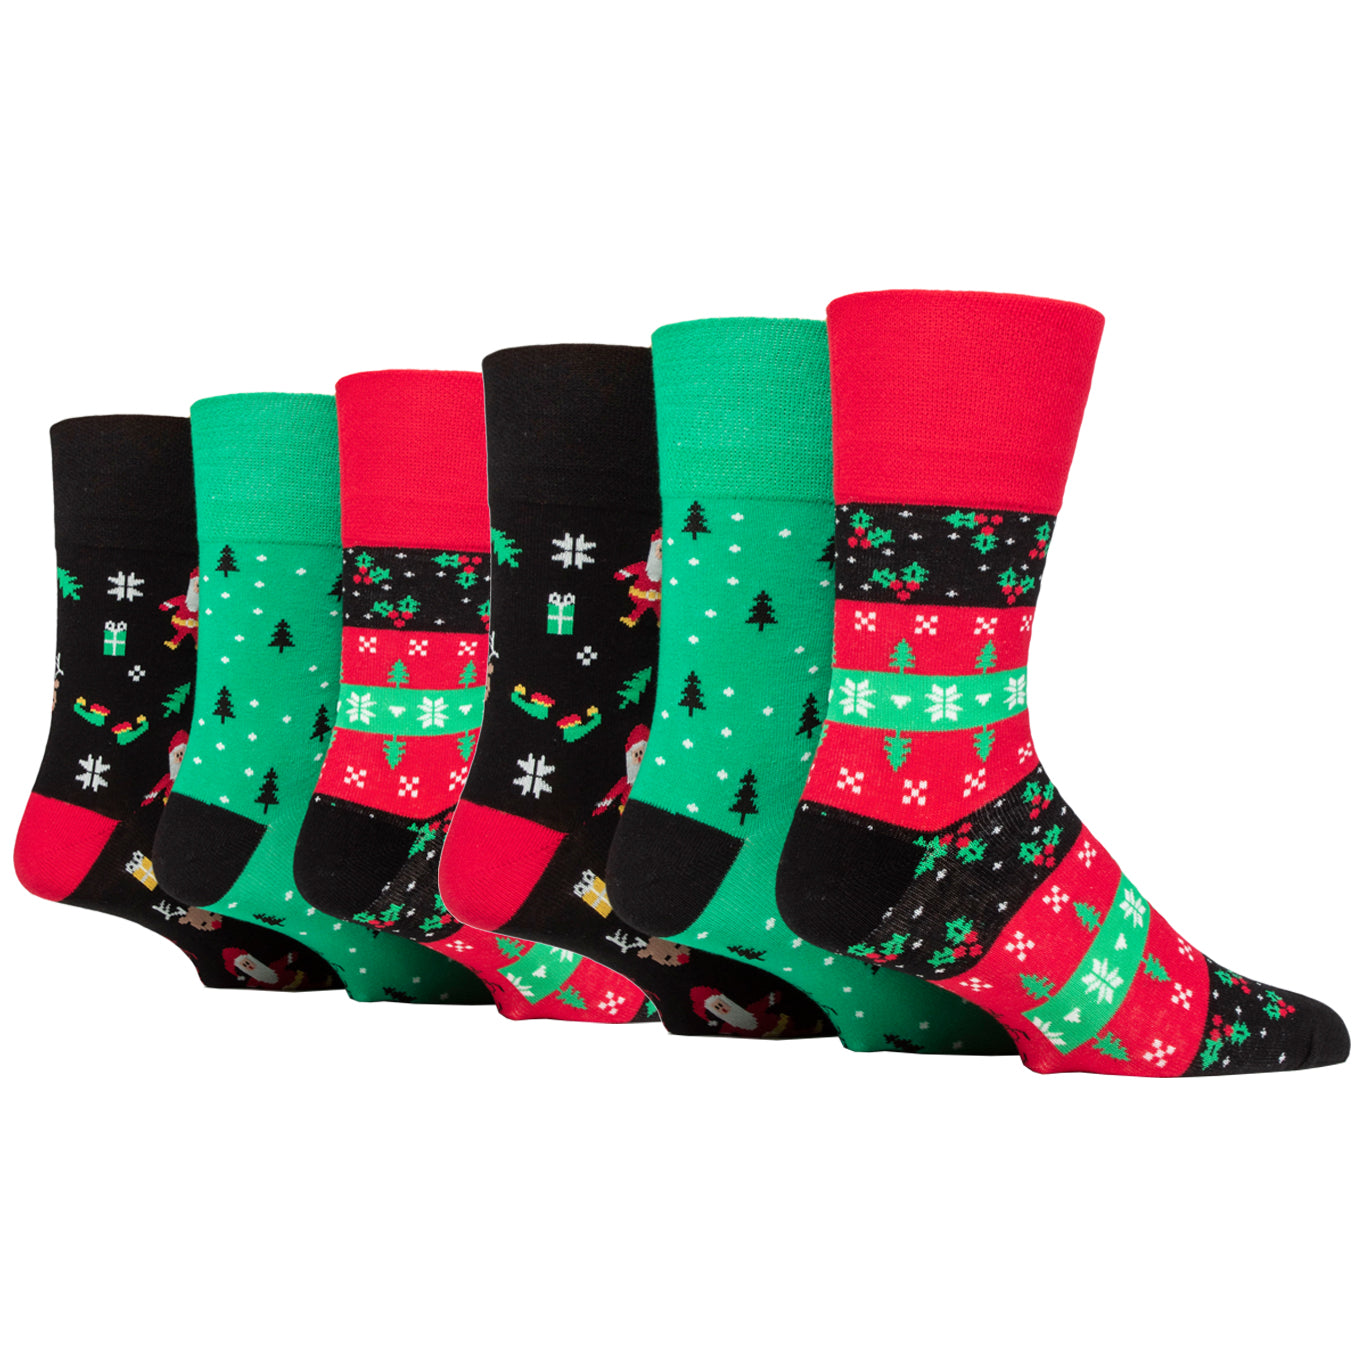 6 Pairs Men's Gentle Grip Fun Feet Christmas Cotton Socks - Holly/Trees/Santa